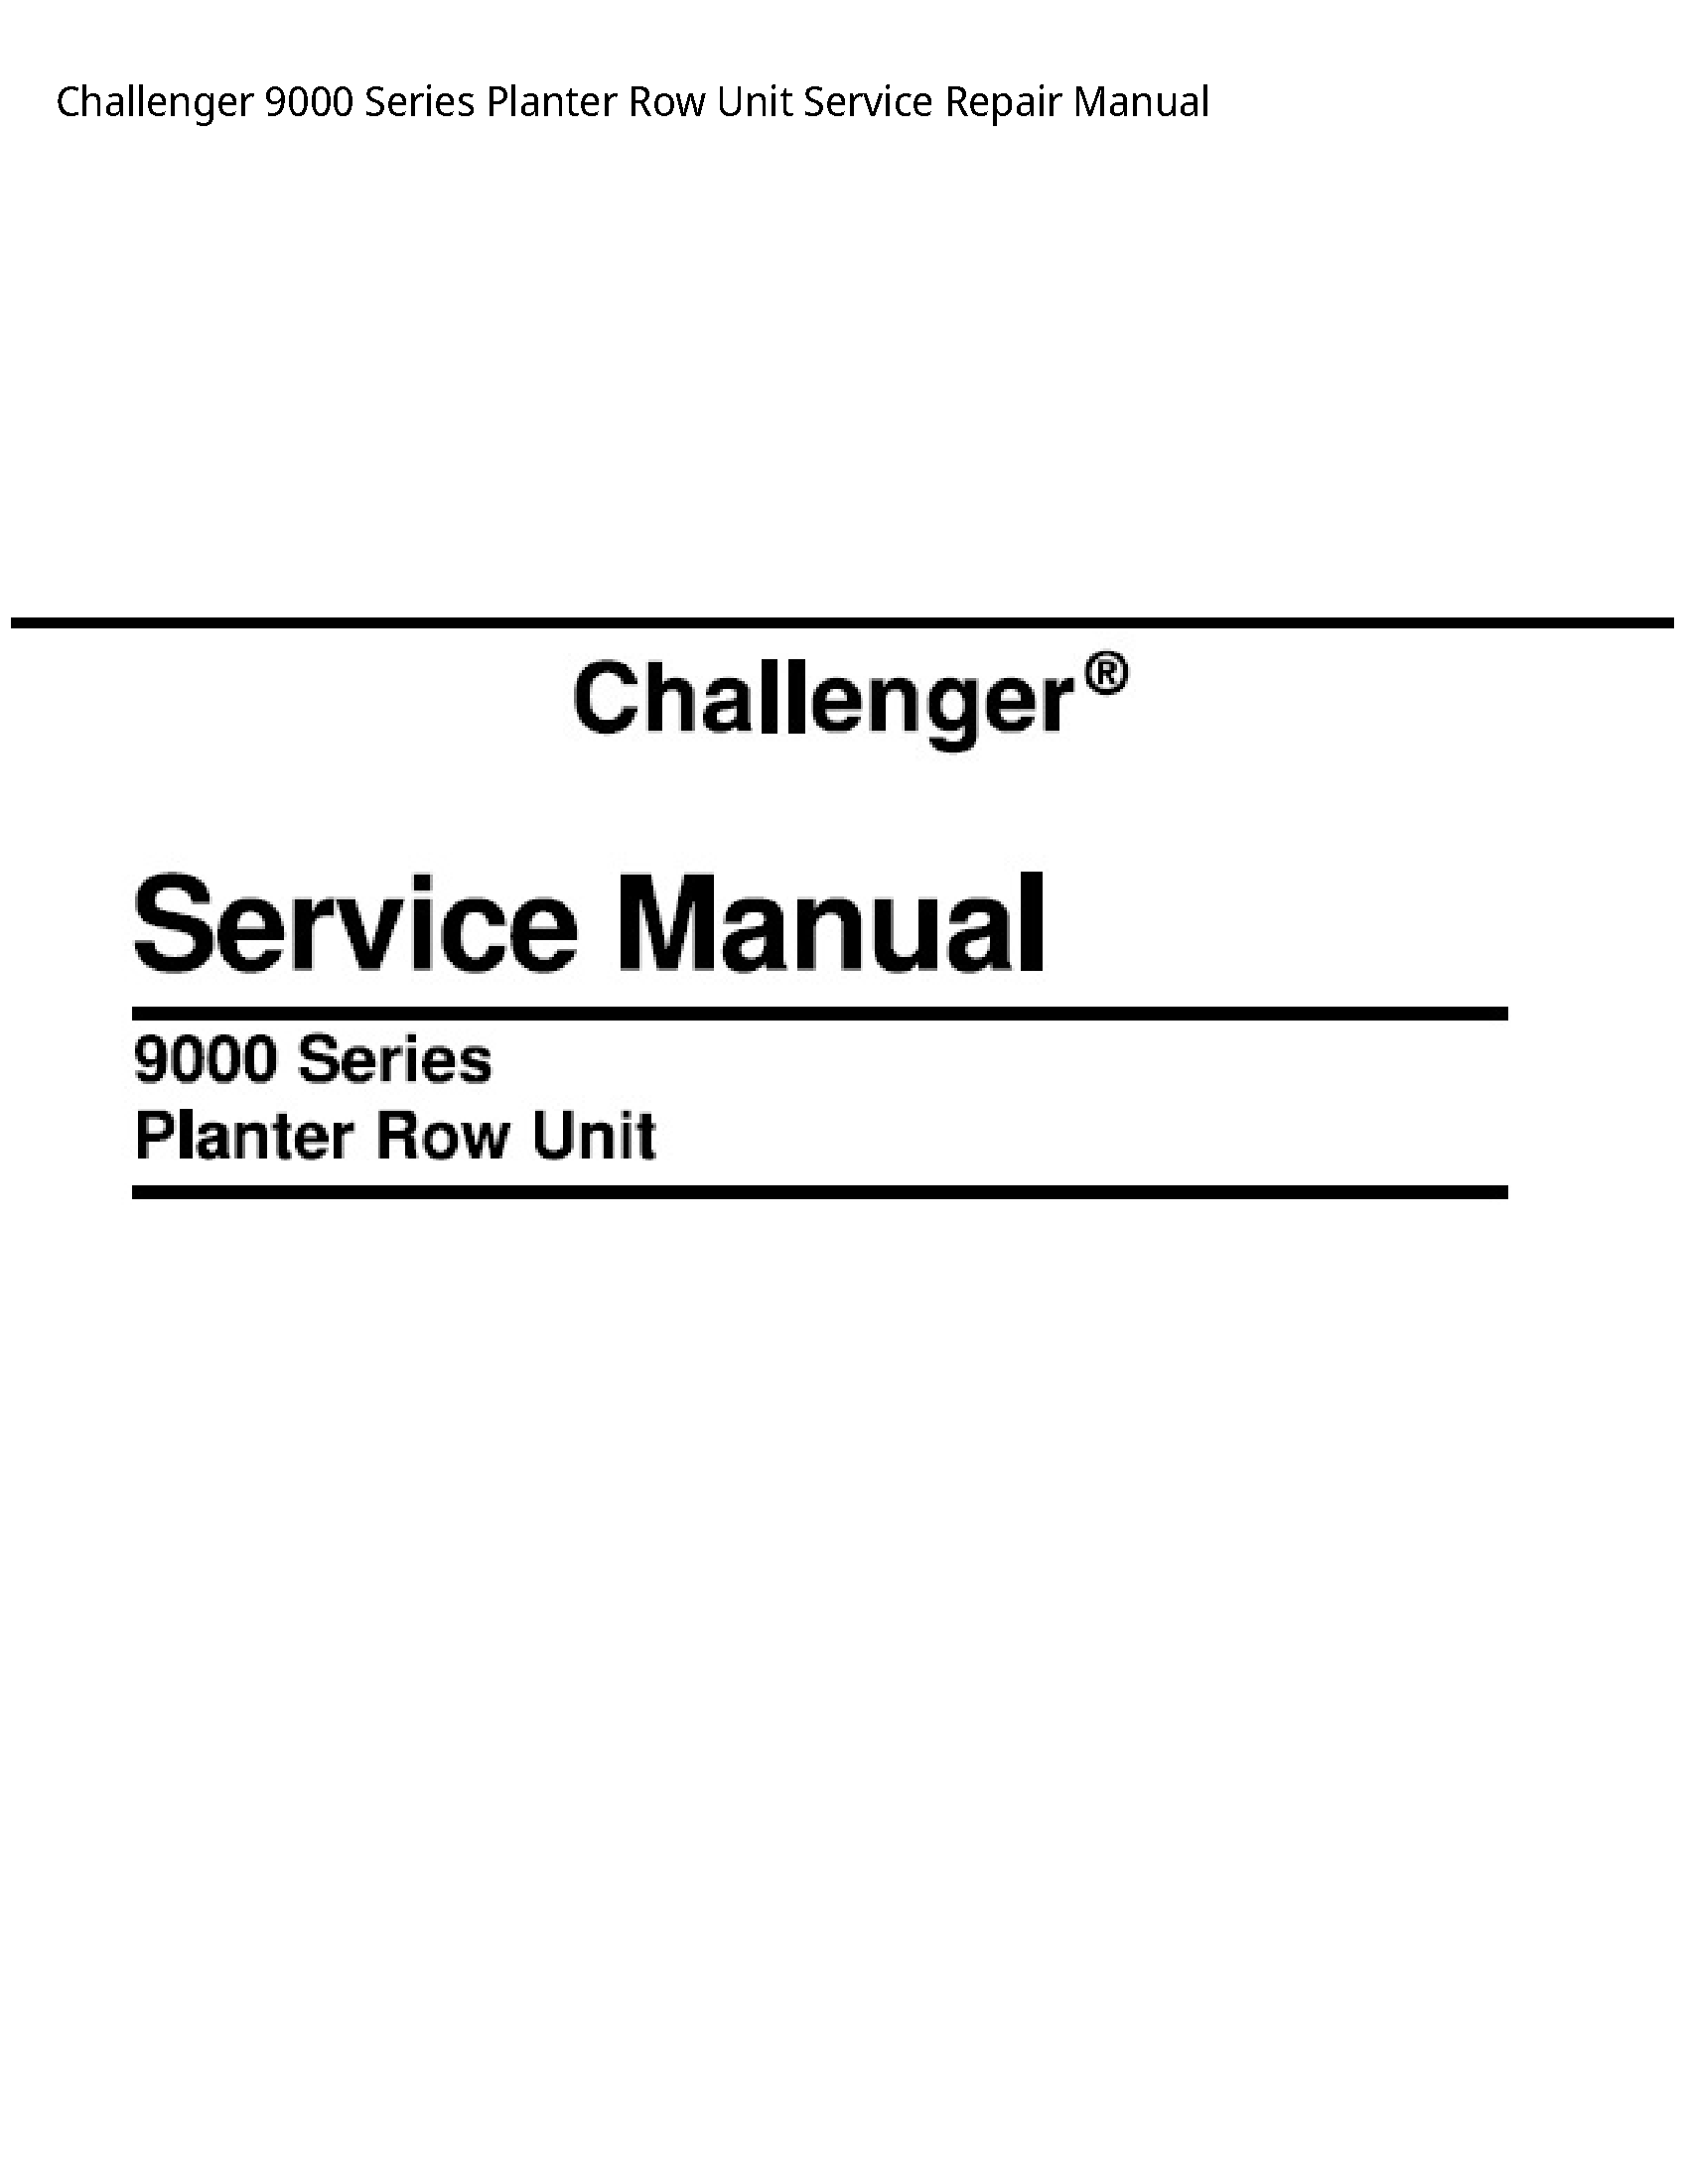 Challenger 9000 Series Planter Row Unit manual